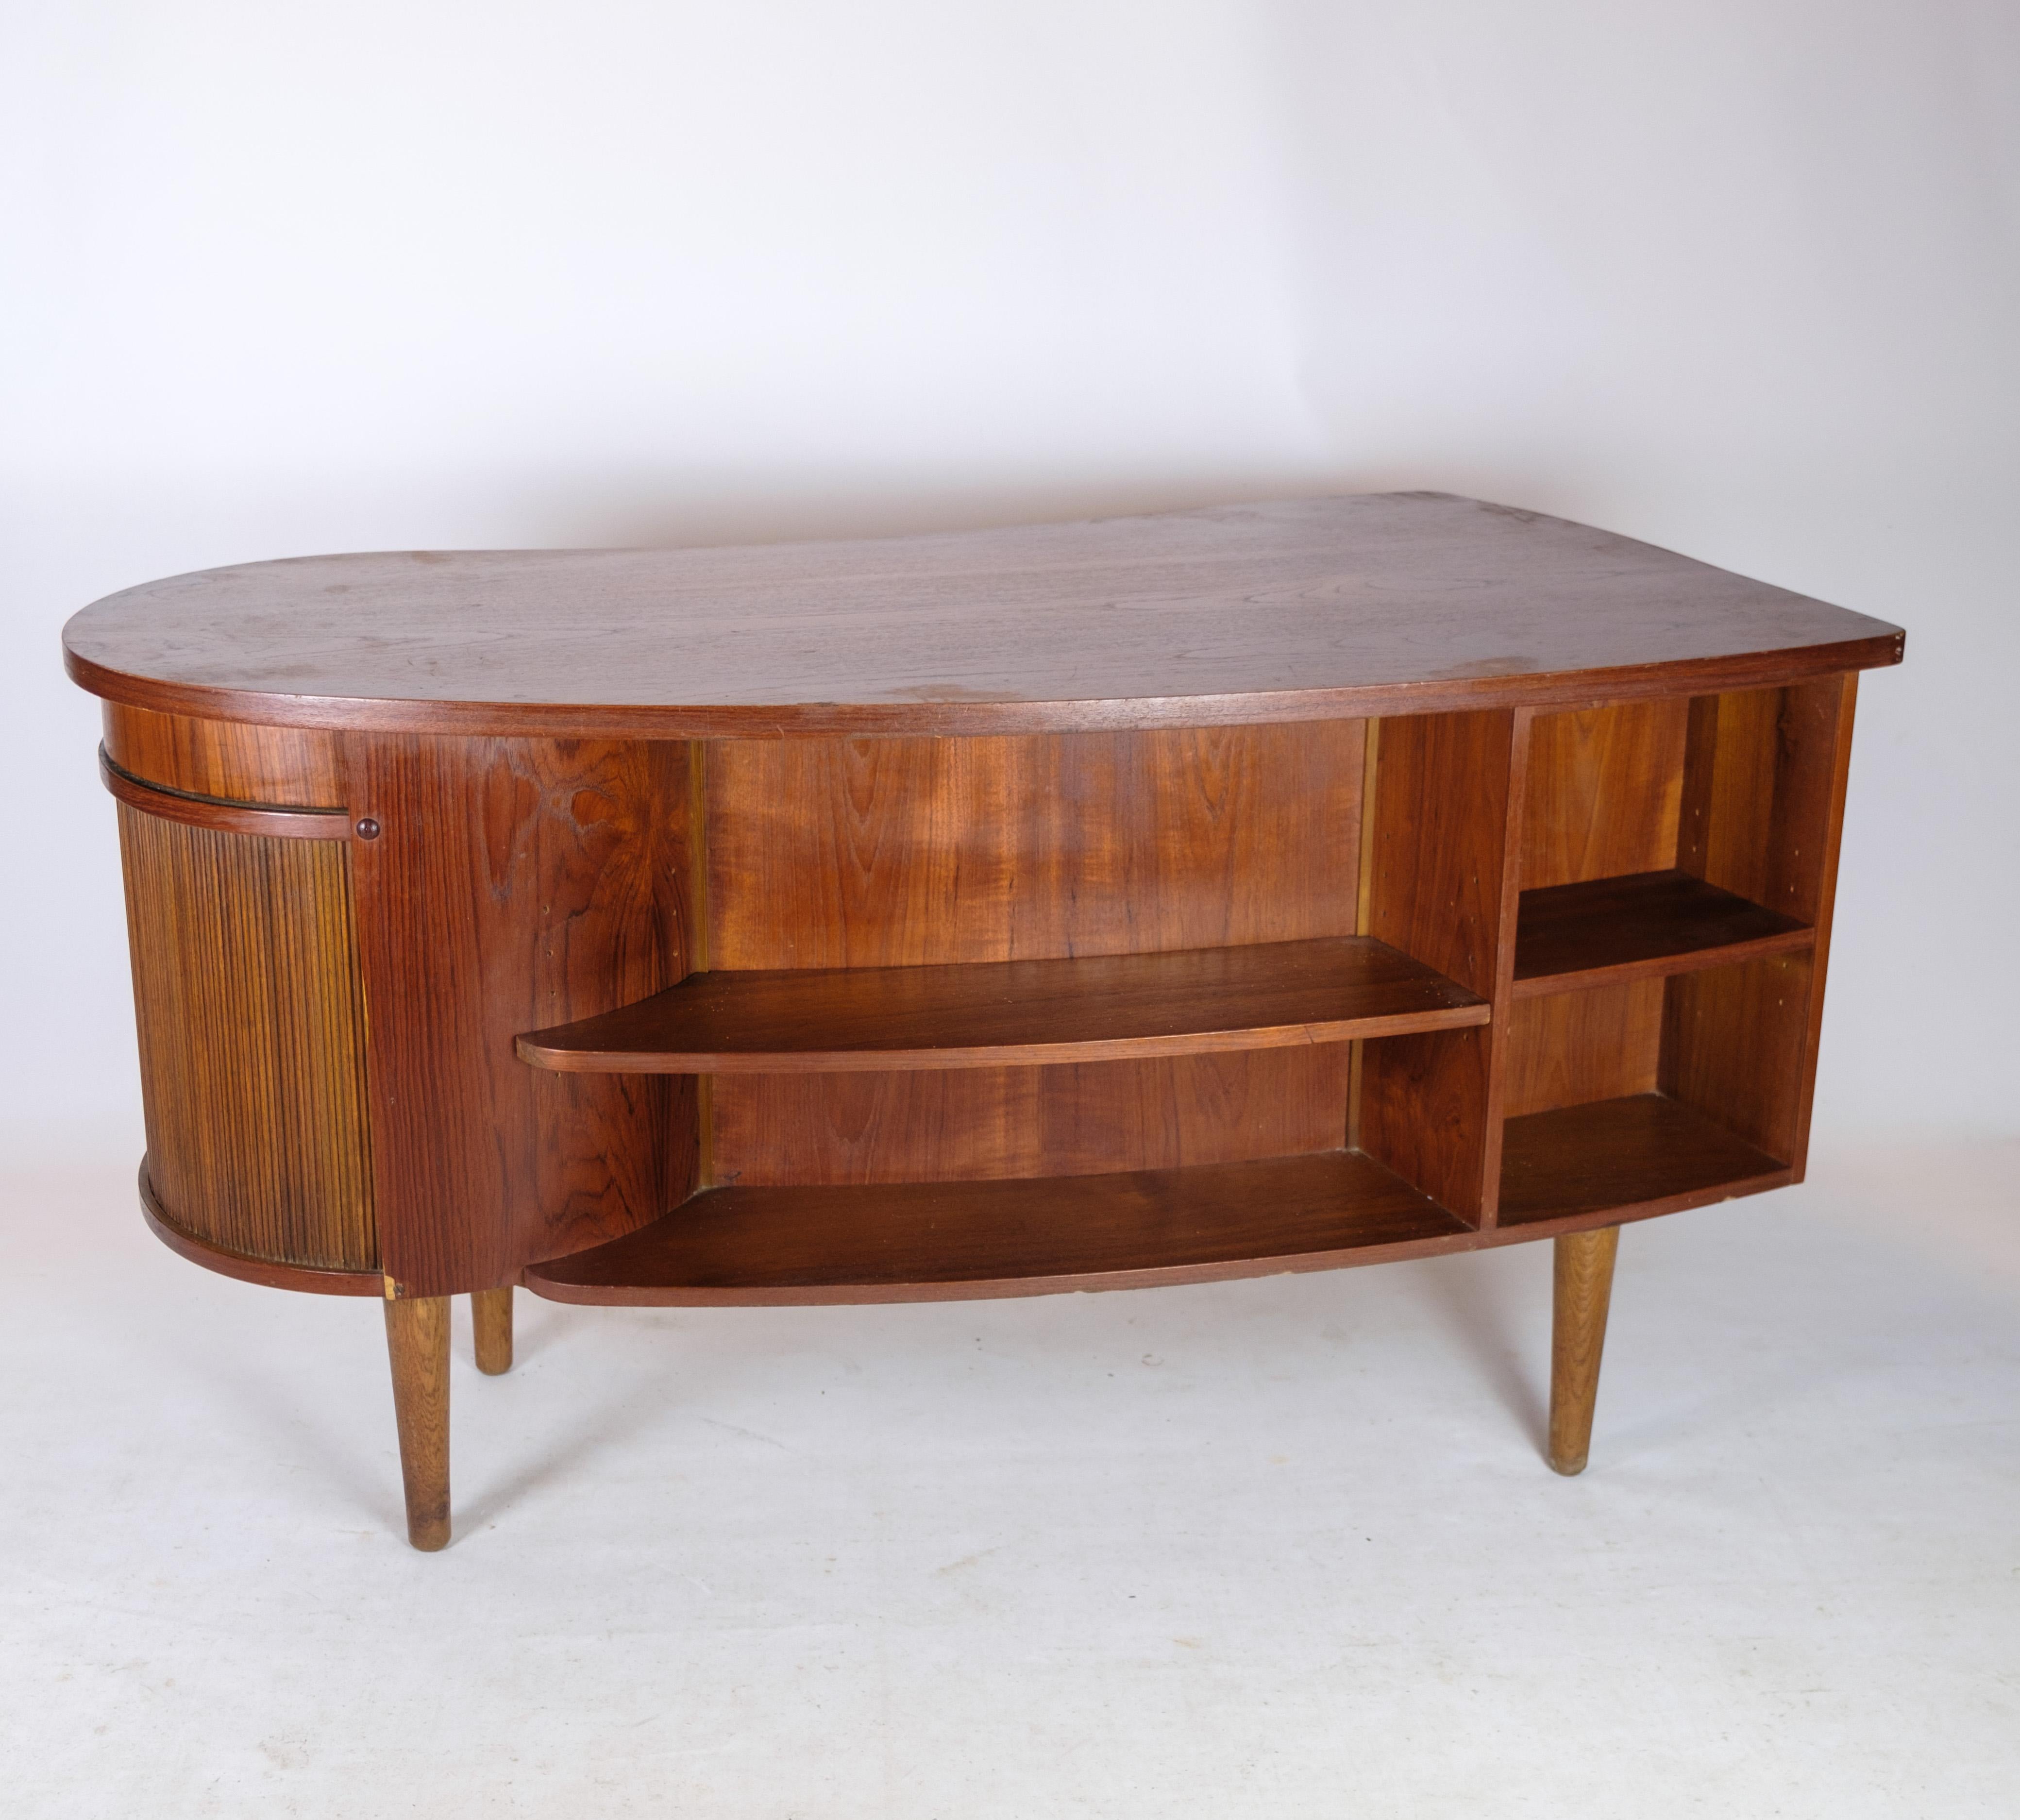 Mid-20th Century Desk in Teak wood model 54 by Kai Kristiansen and Feldballes furniture from 1954 For Sale